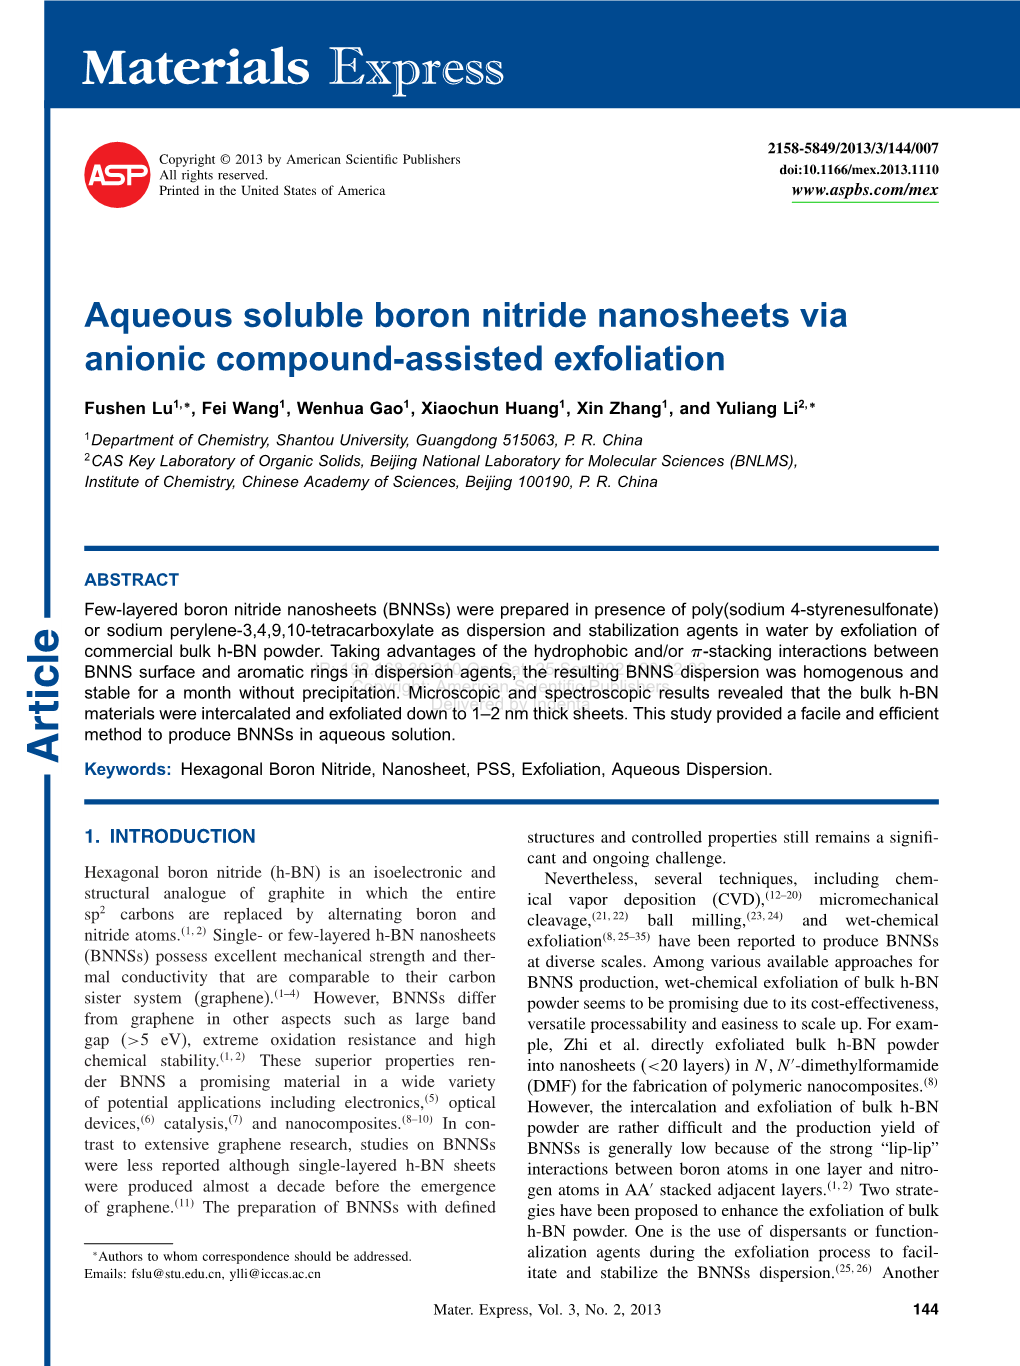 Aqueous Soluble Boron Nitride Nanosheets Via Anionic Compound-Assisted Exfoliation